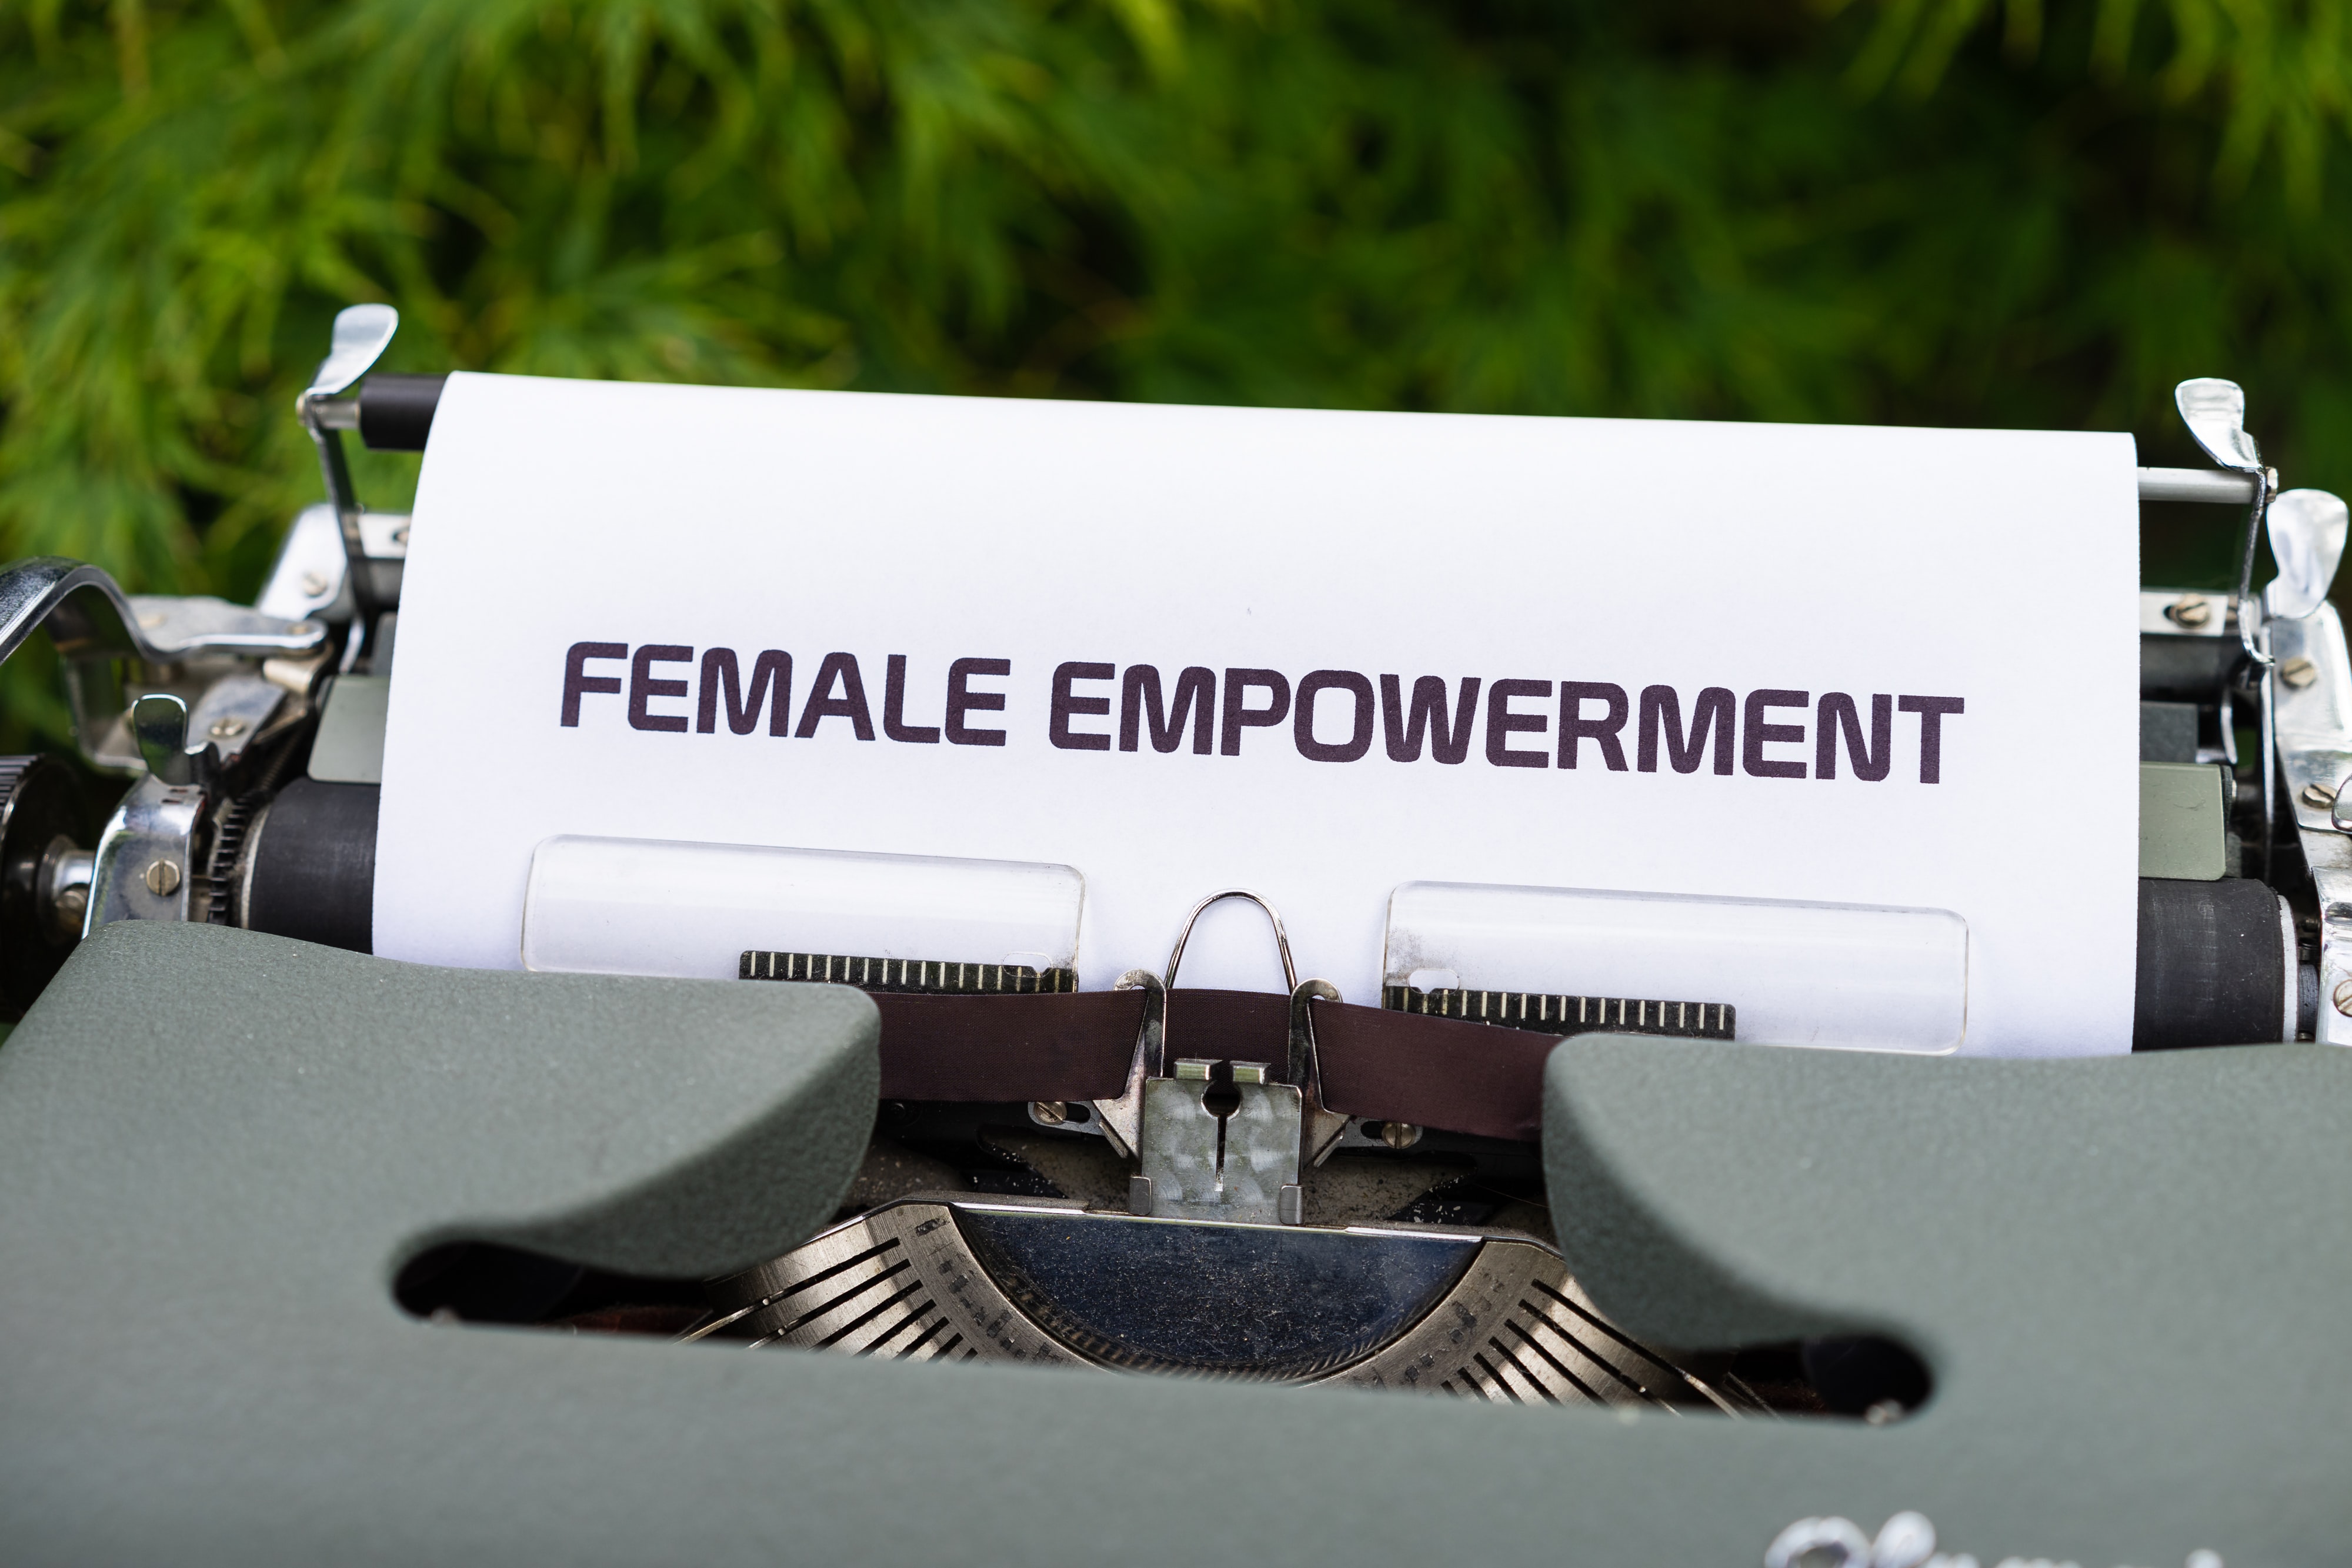 Female Empowerment written on paper in typewriter